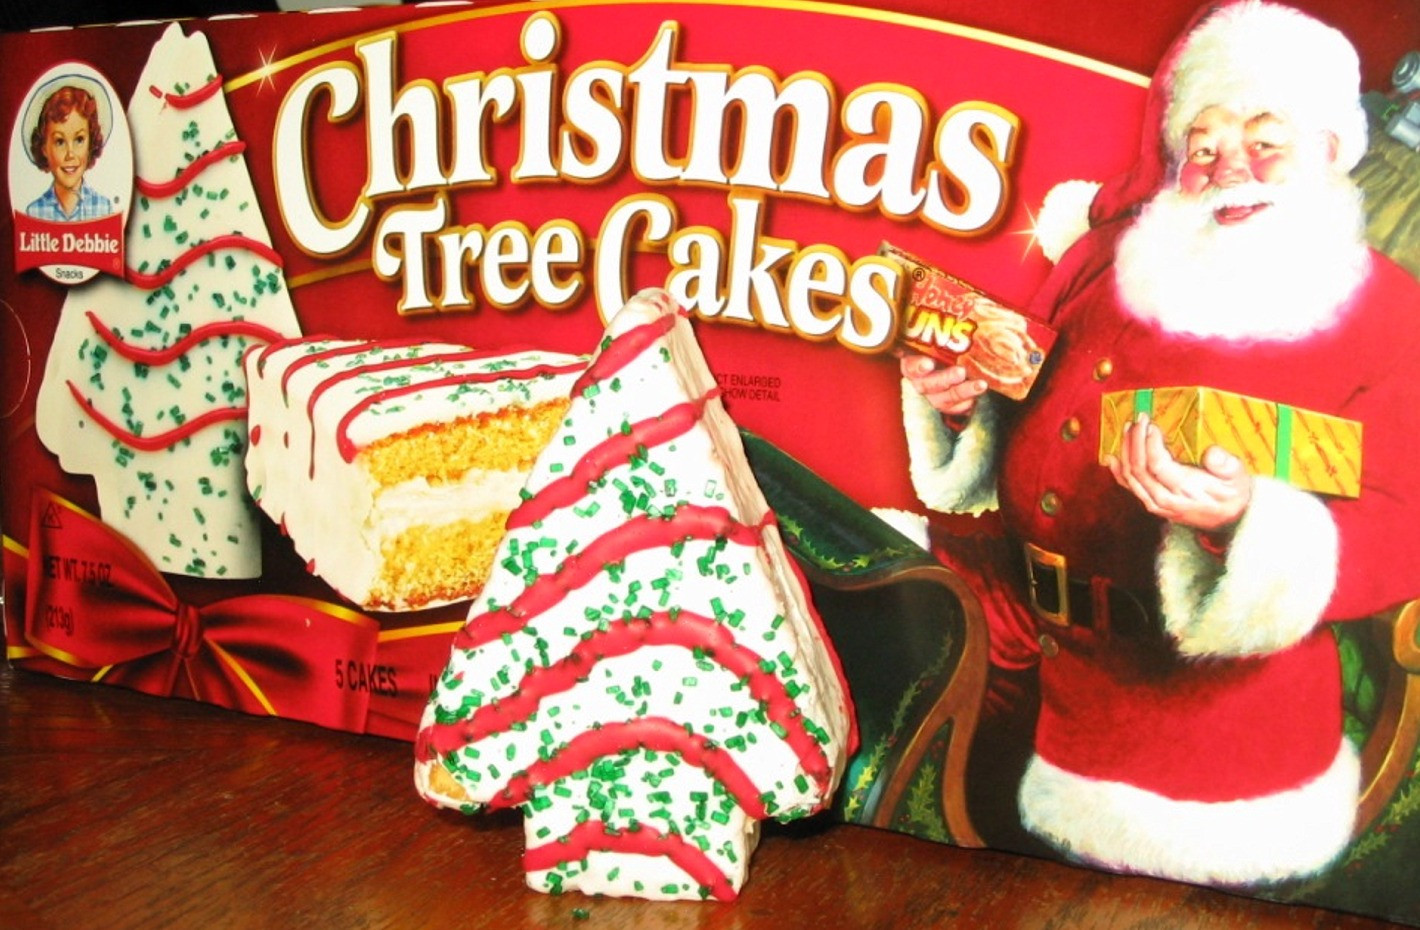 Christmas Tree Snack Cakes
 The Holidaze Little Debbie Christmas Tree Cakes